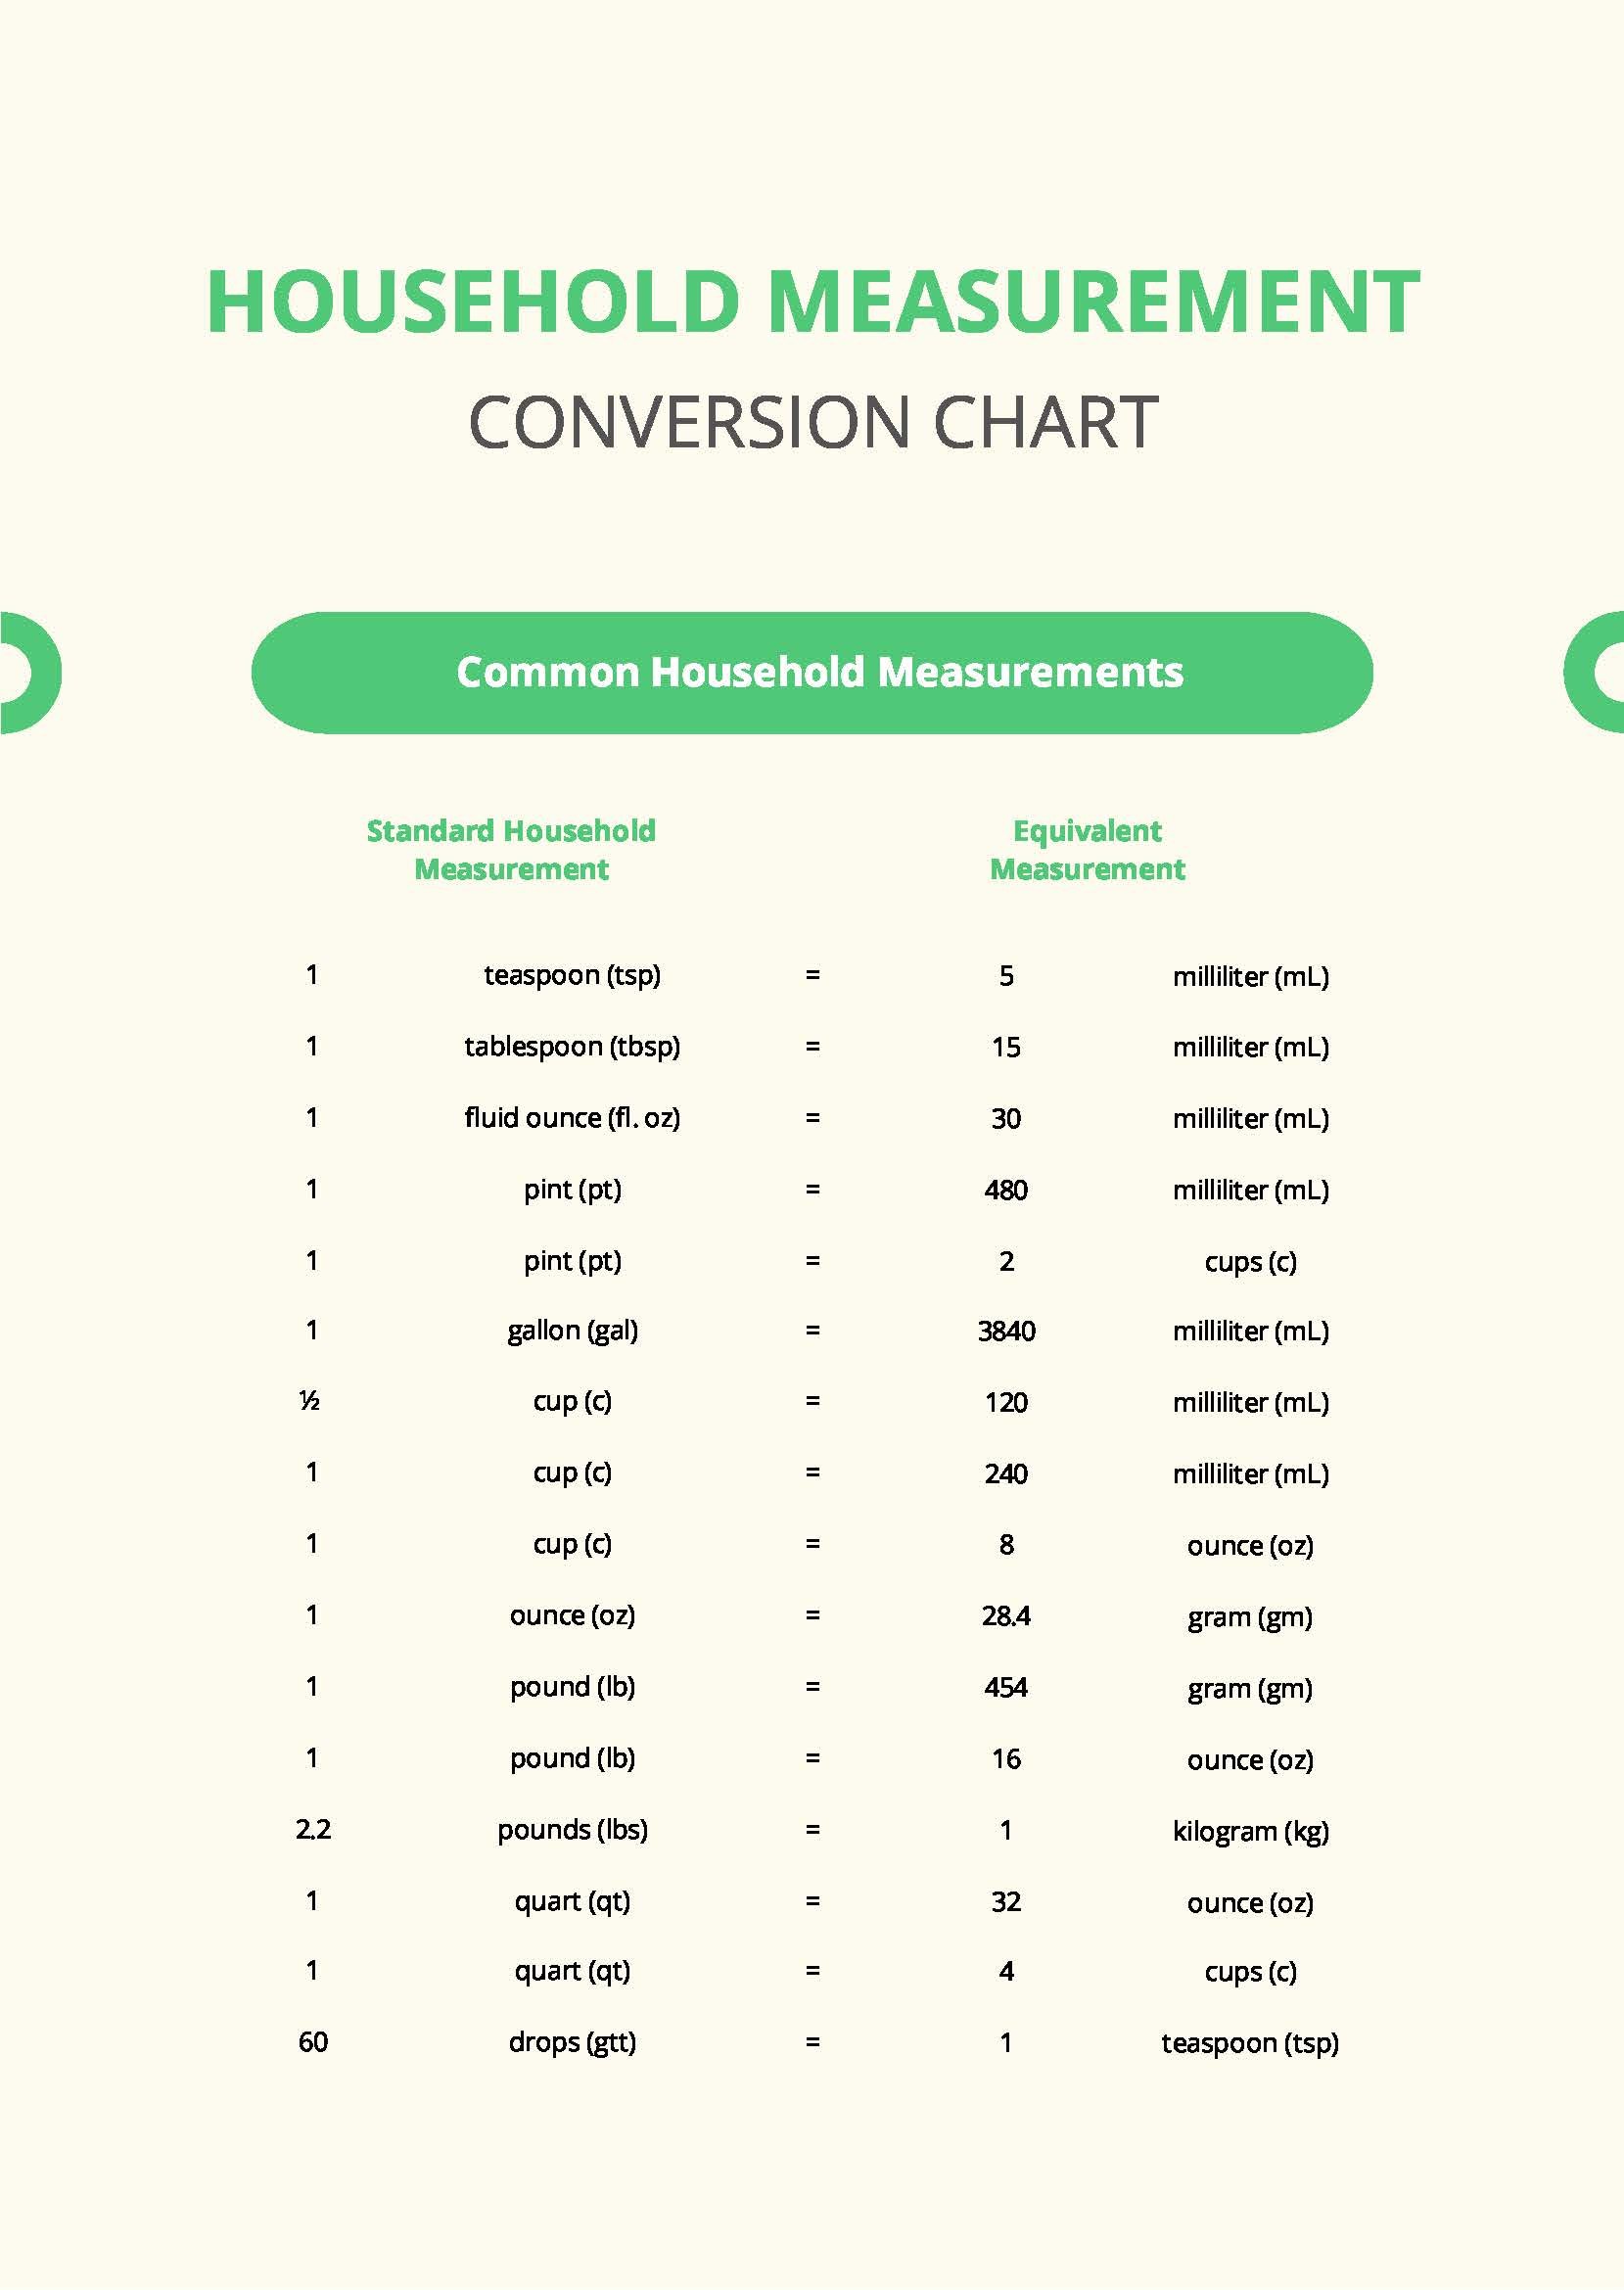 https://images.template.net/101158/household-measurement-conversion-chart-42bdo.jpg